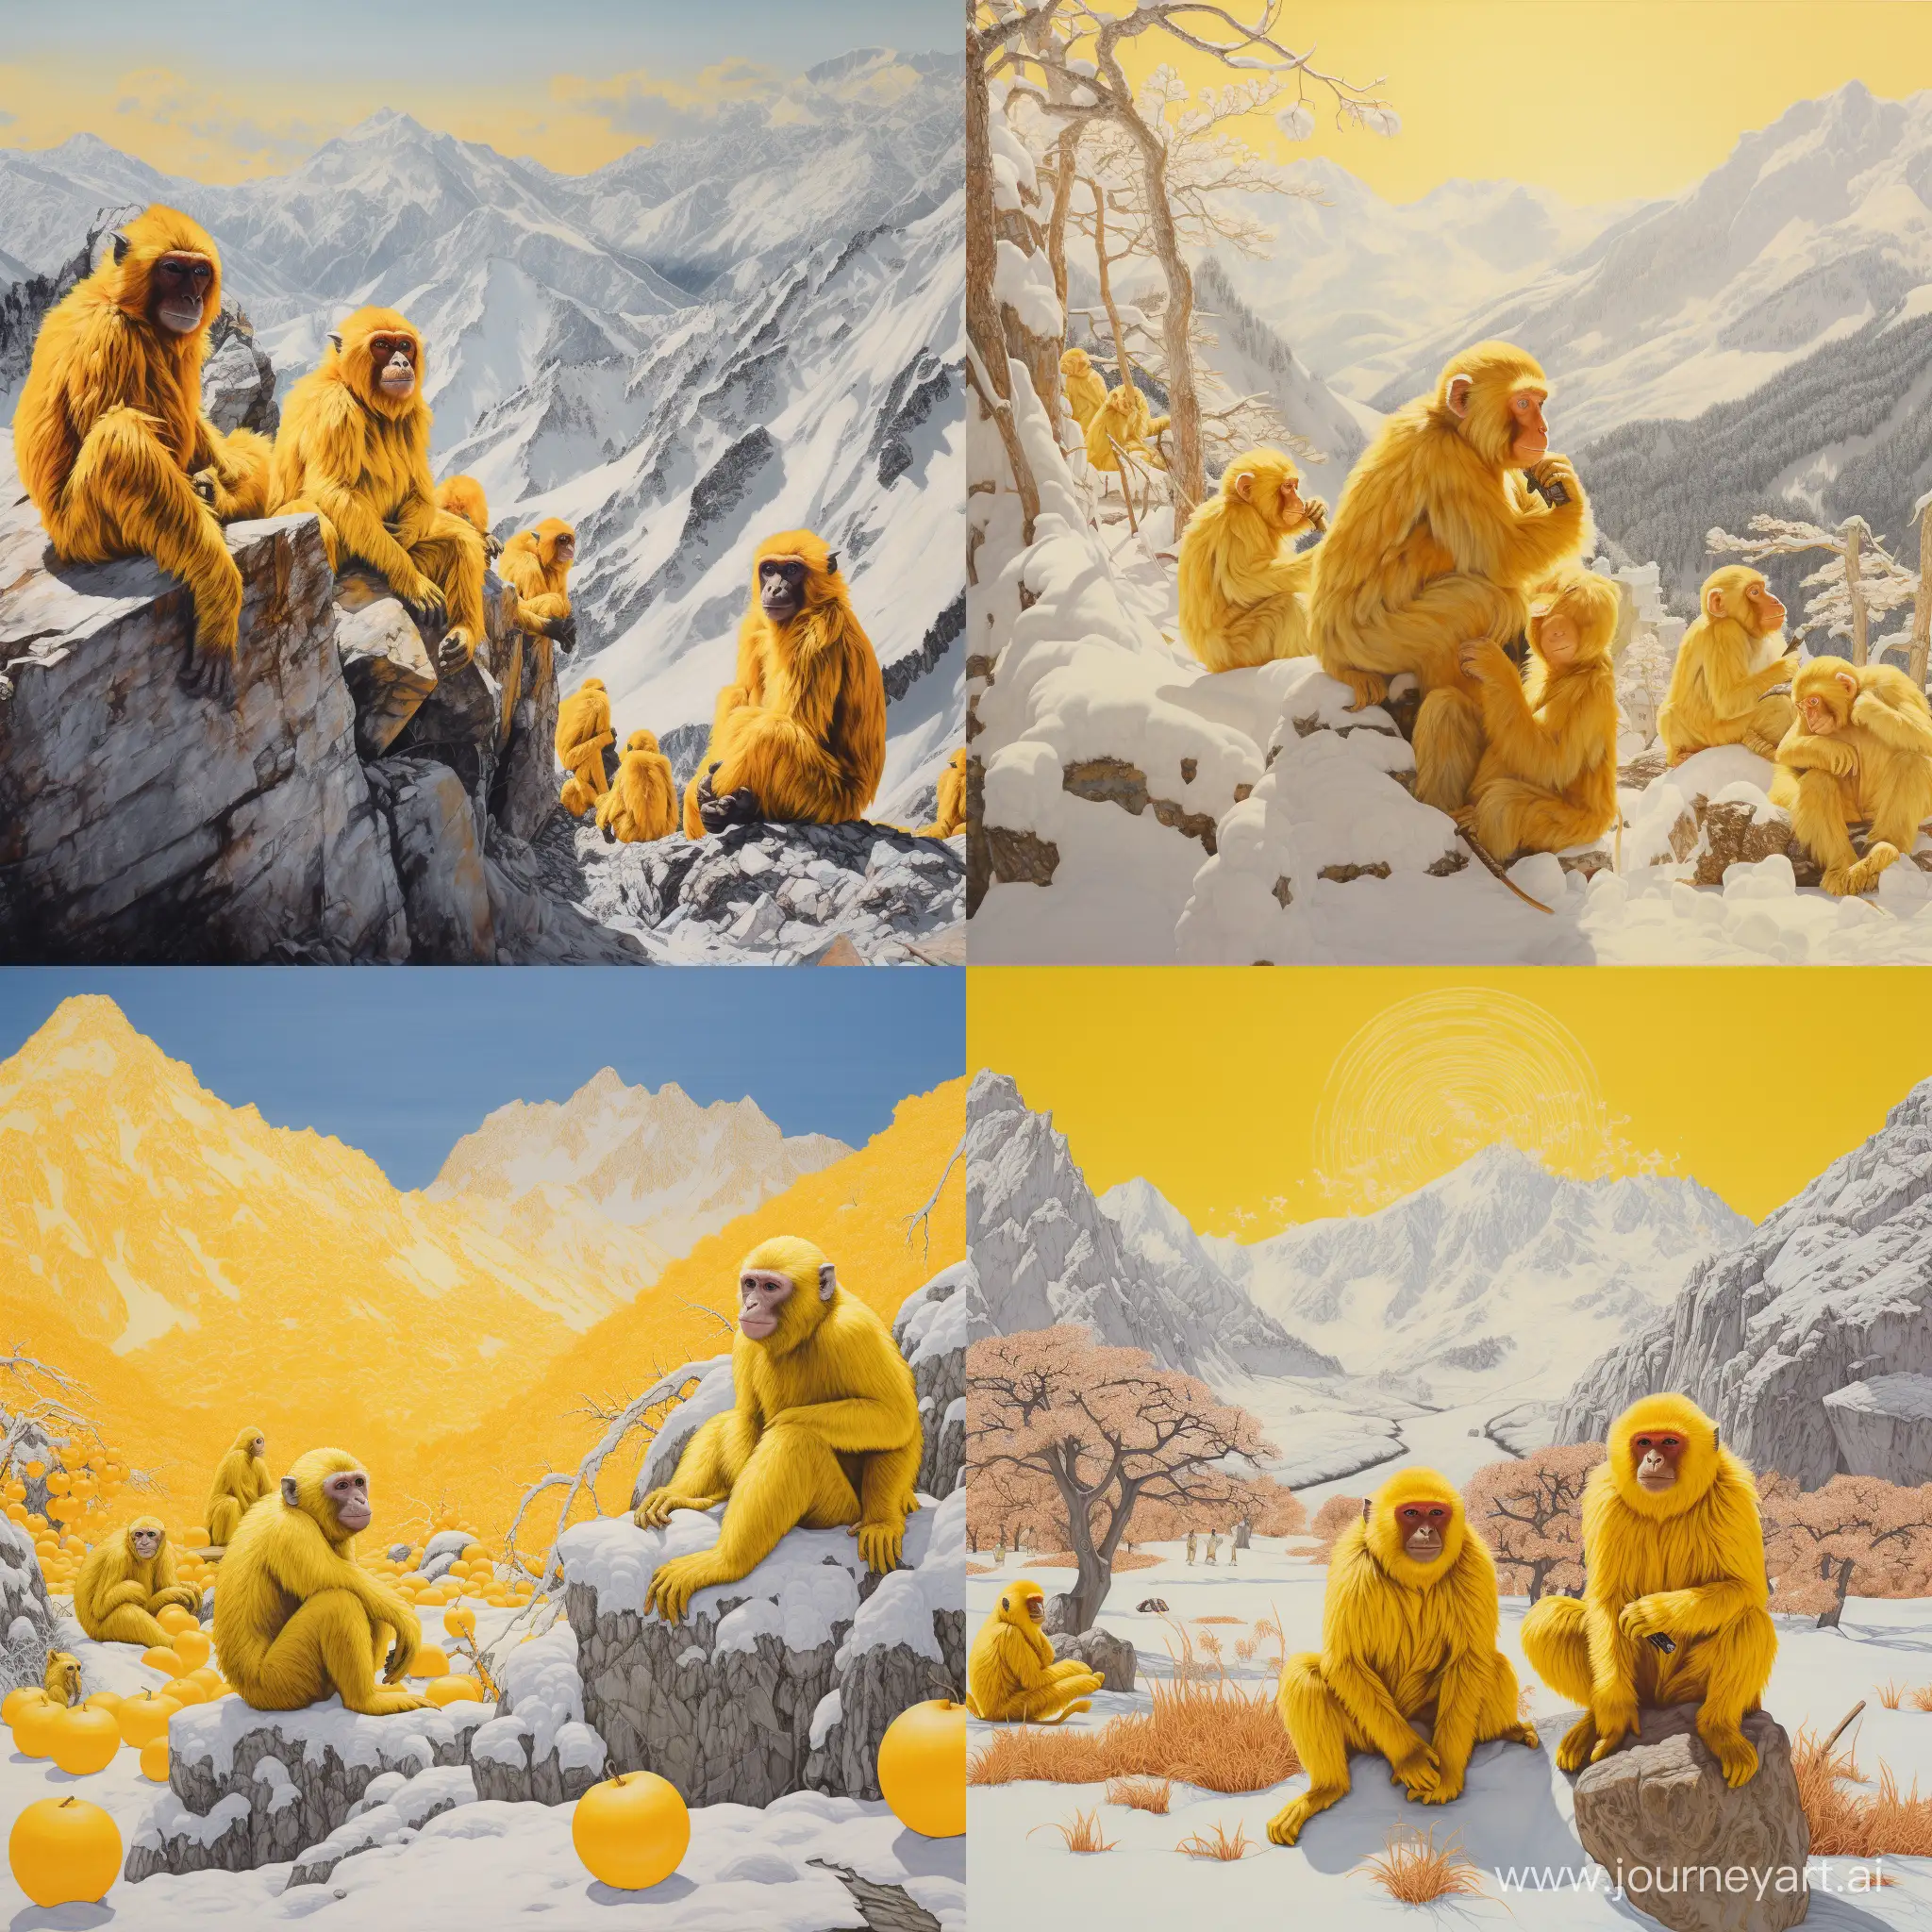 Playful-Yellow-Monkeys-Frolicking-in-Snowy-Mountain-Landscape